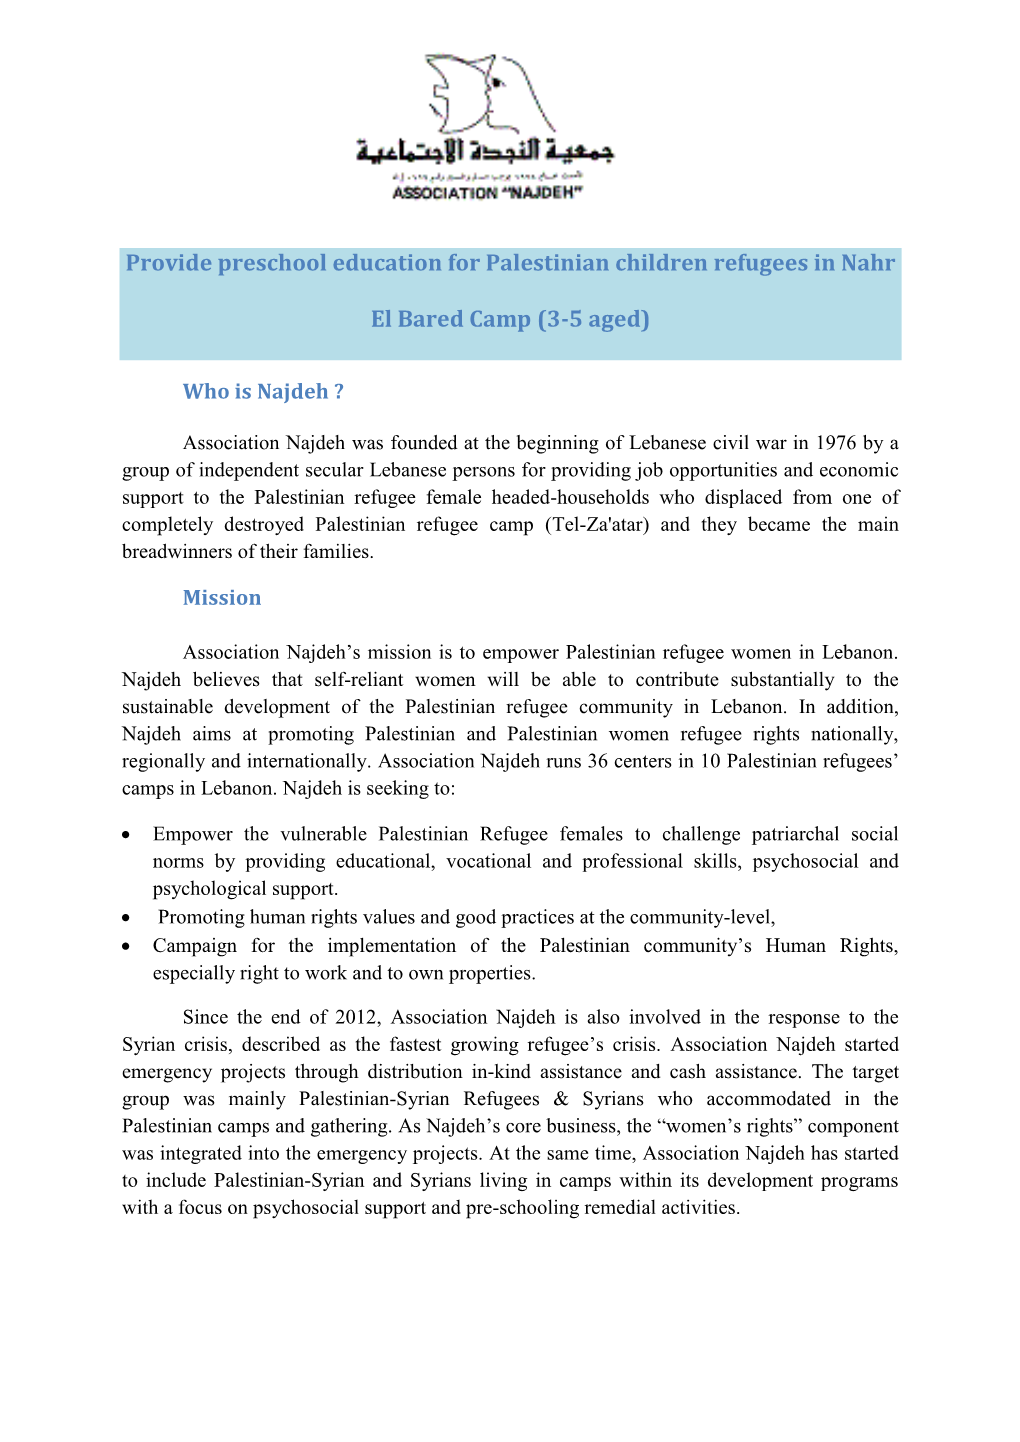 Provide Preschool Education for Palestinian Children Refugees in Nahr